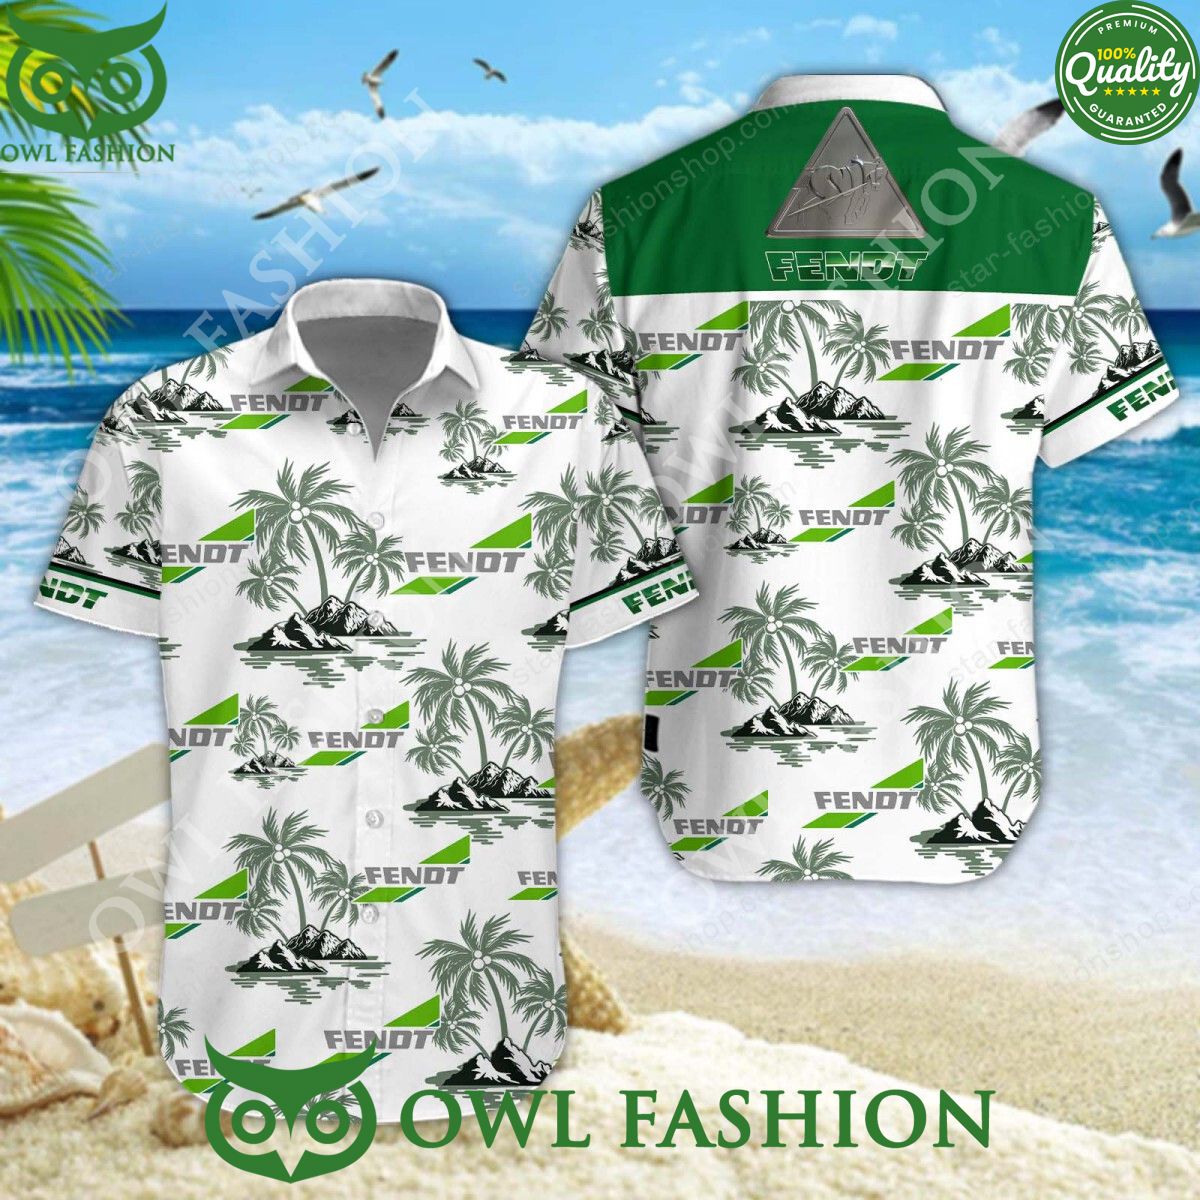 Fendt German agricultural machinery manufacturer hawaiian shirt and short